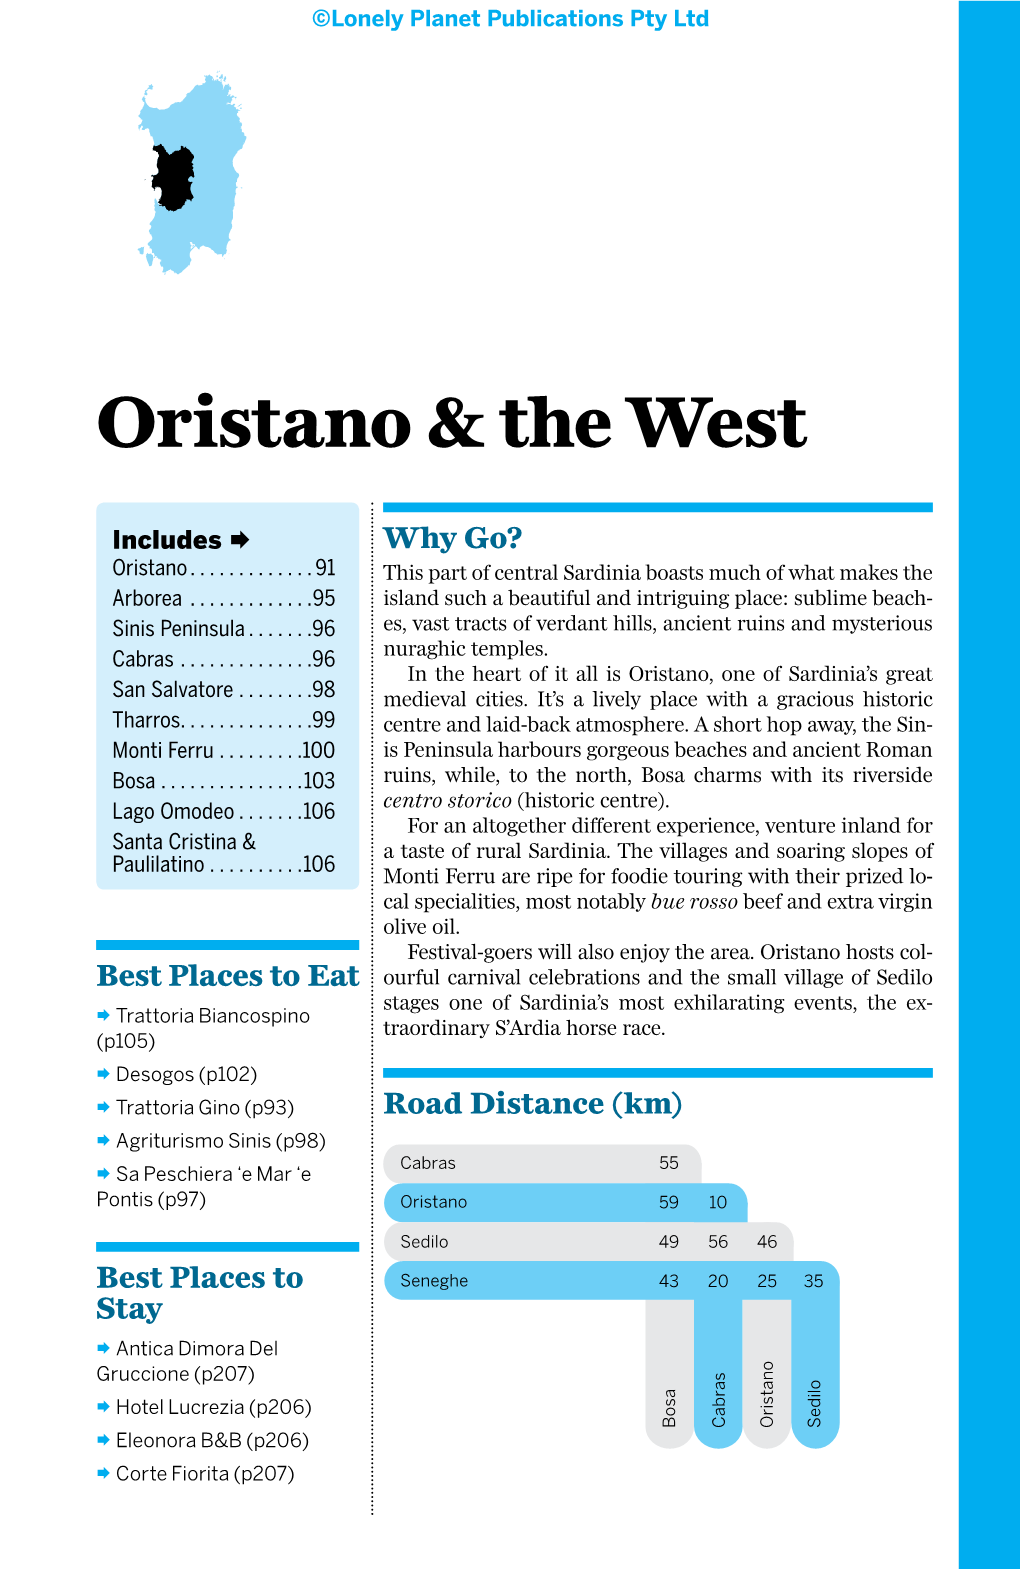 Oristano & the West